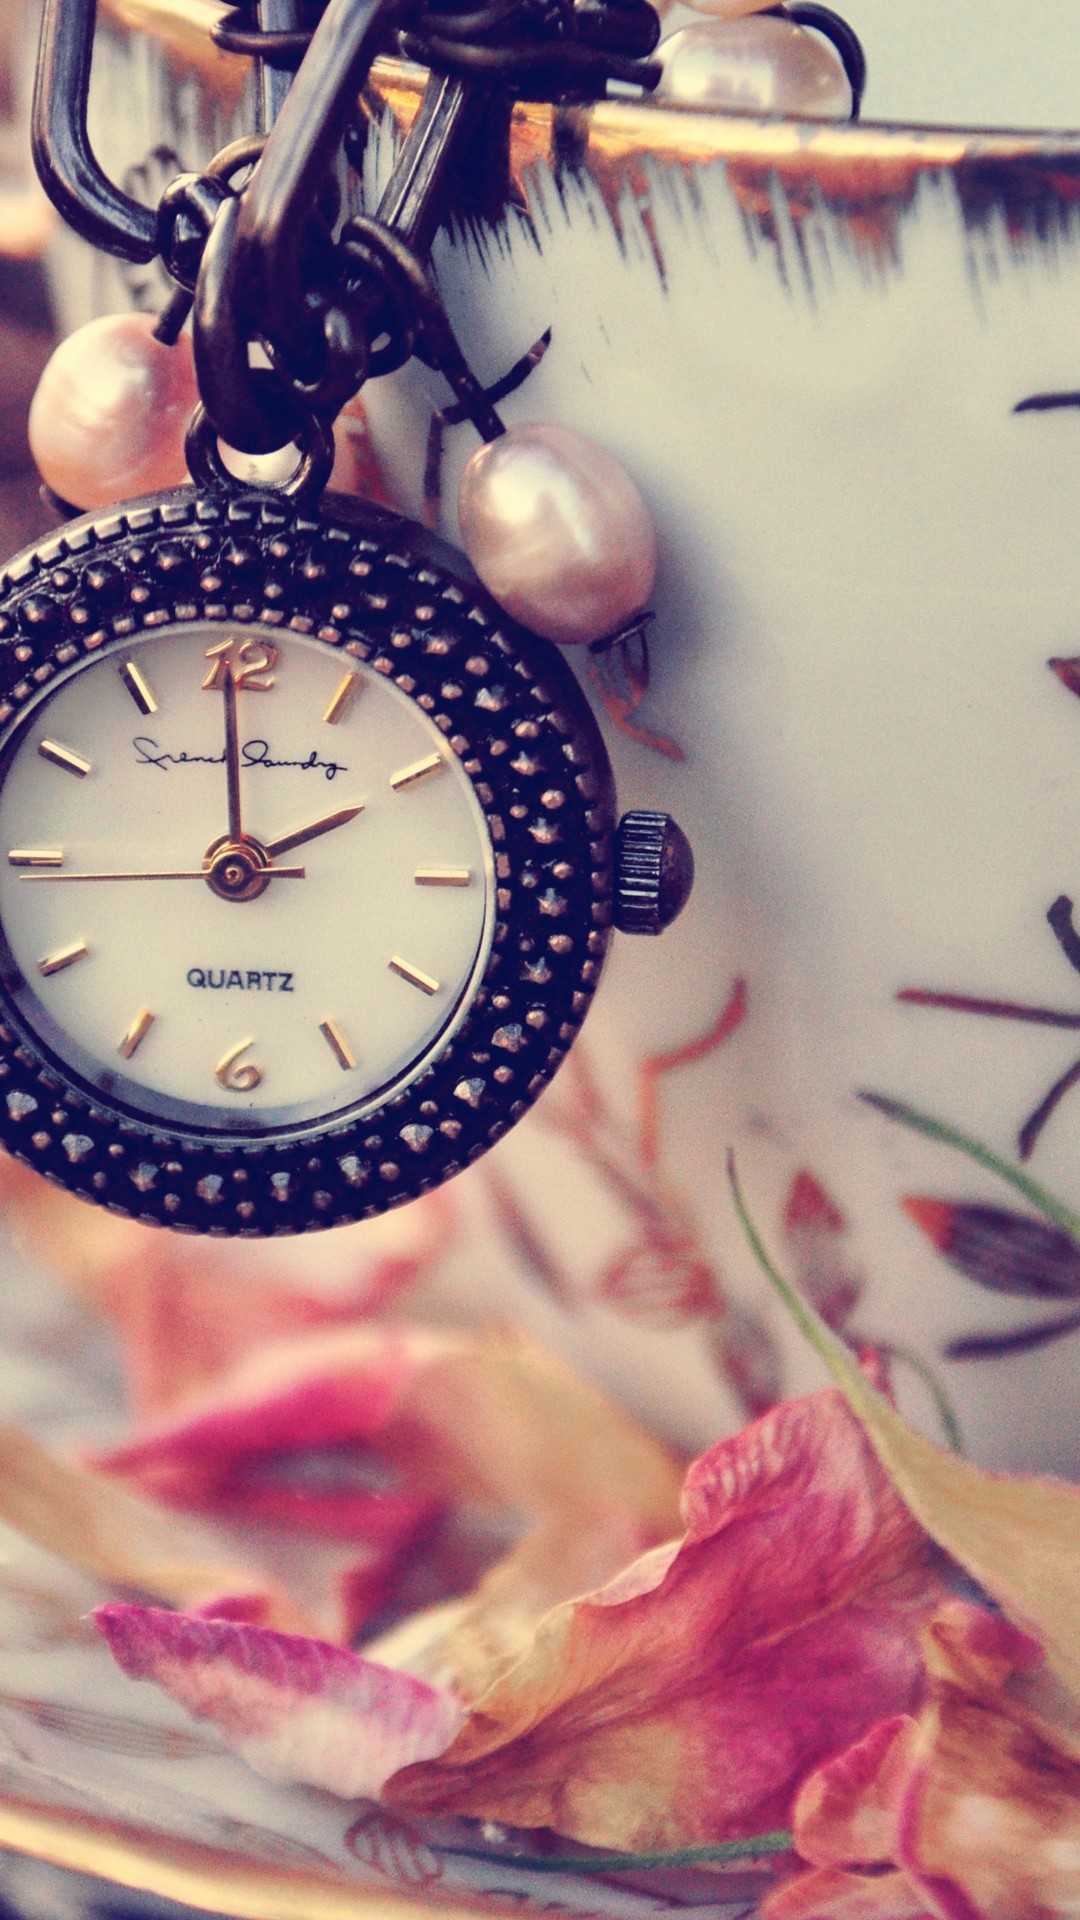 girly wallpapers hd,analog watch,watch,violet,pocket watch,purple